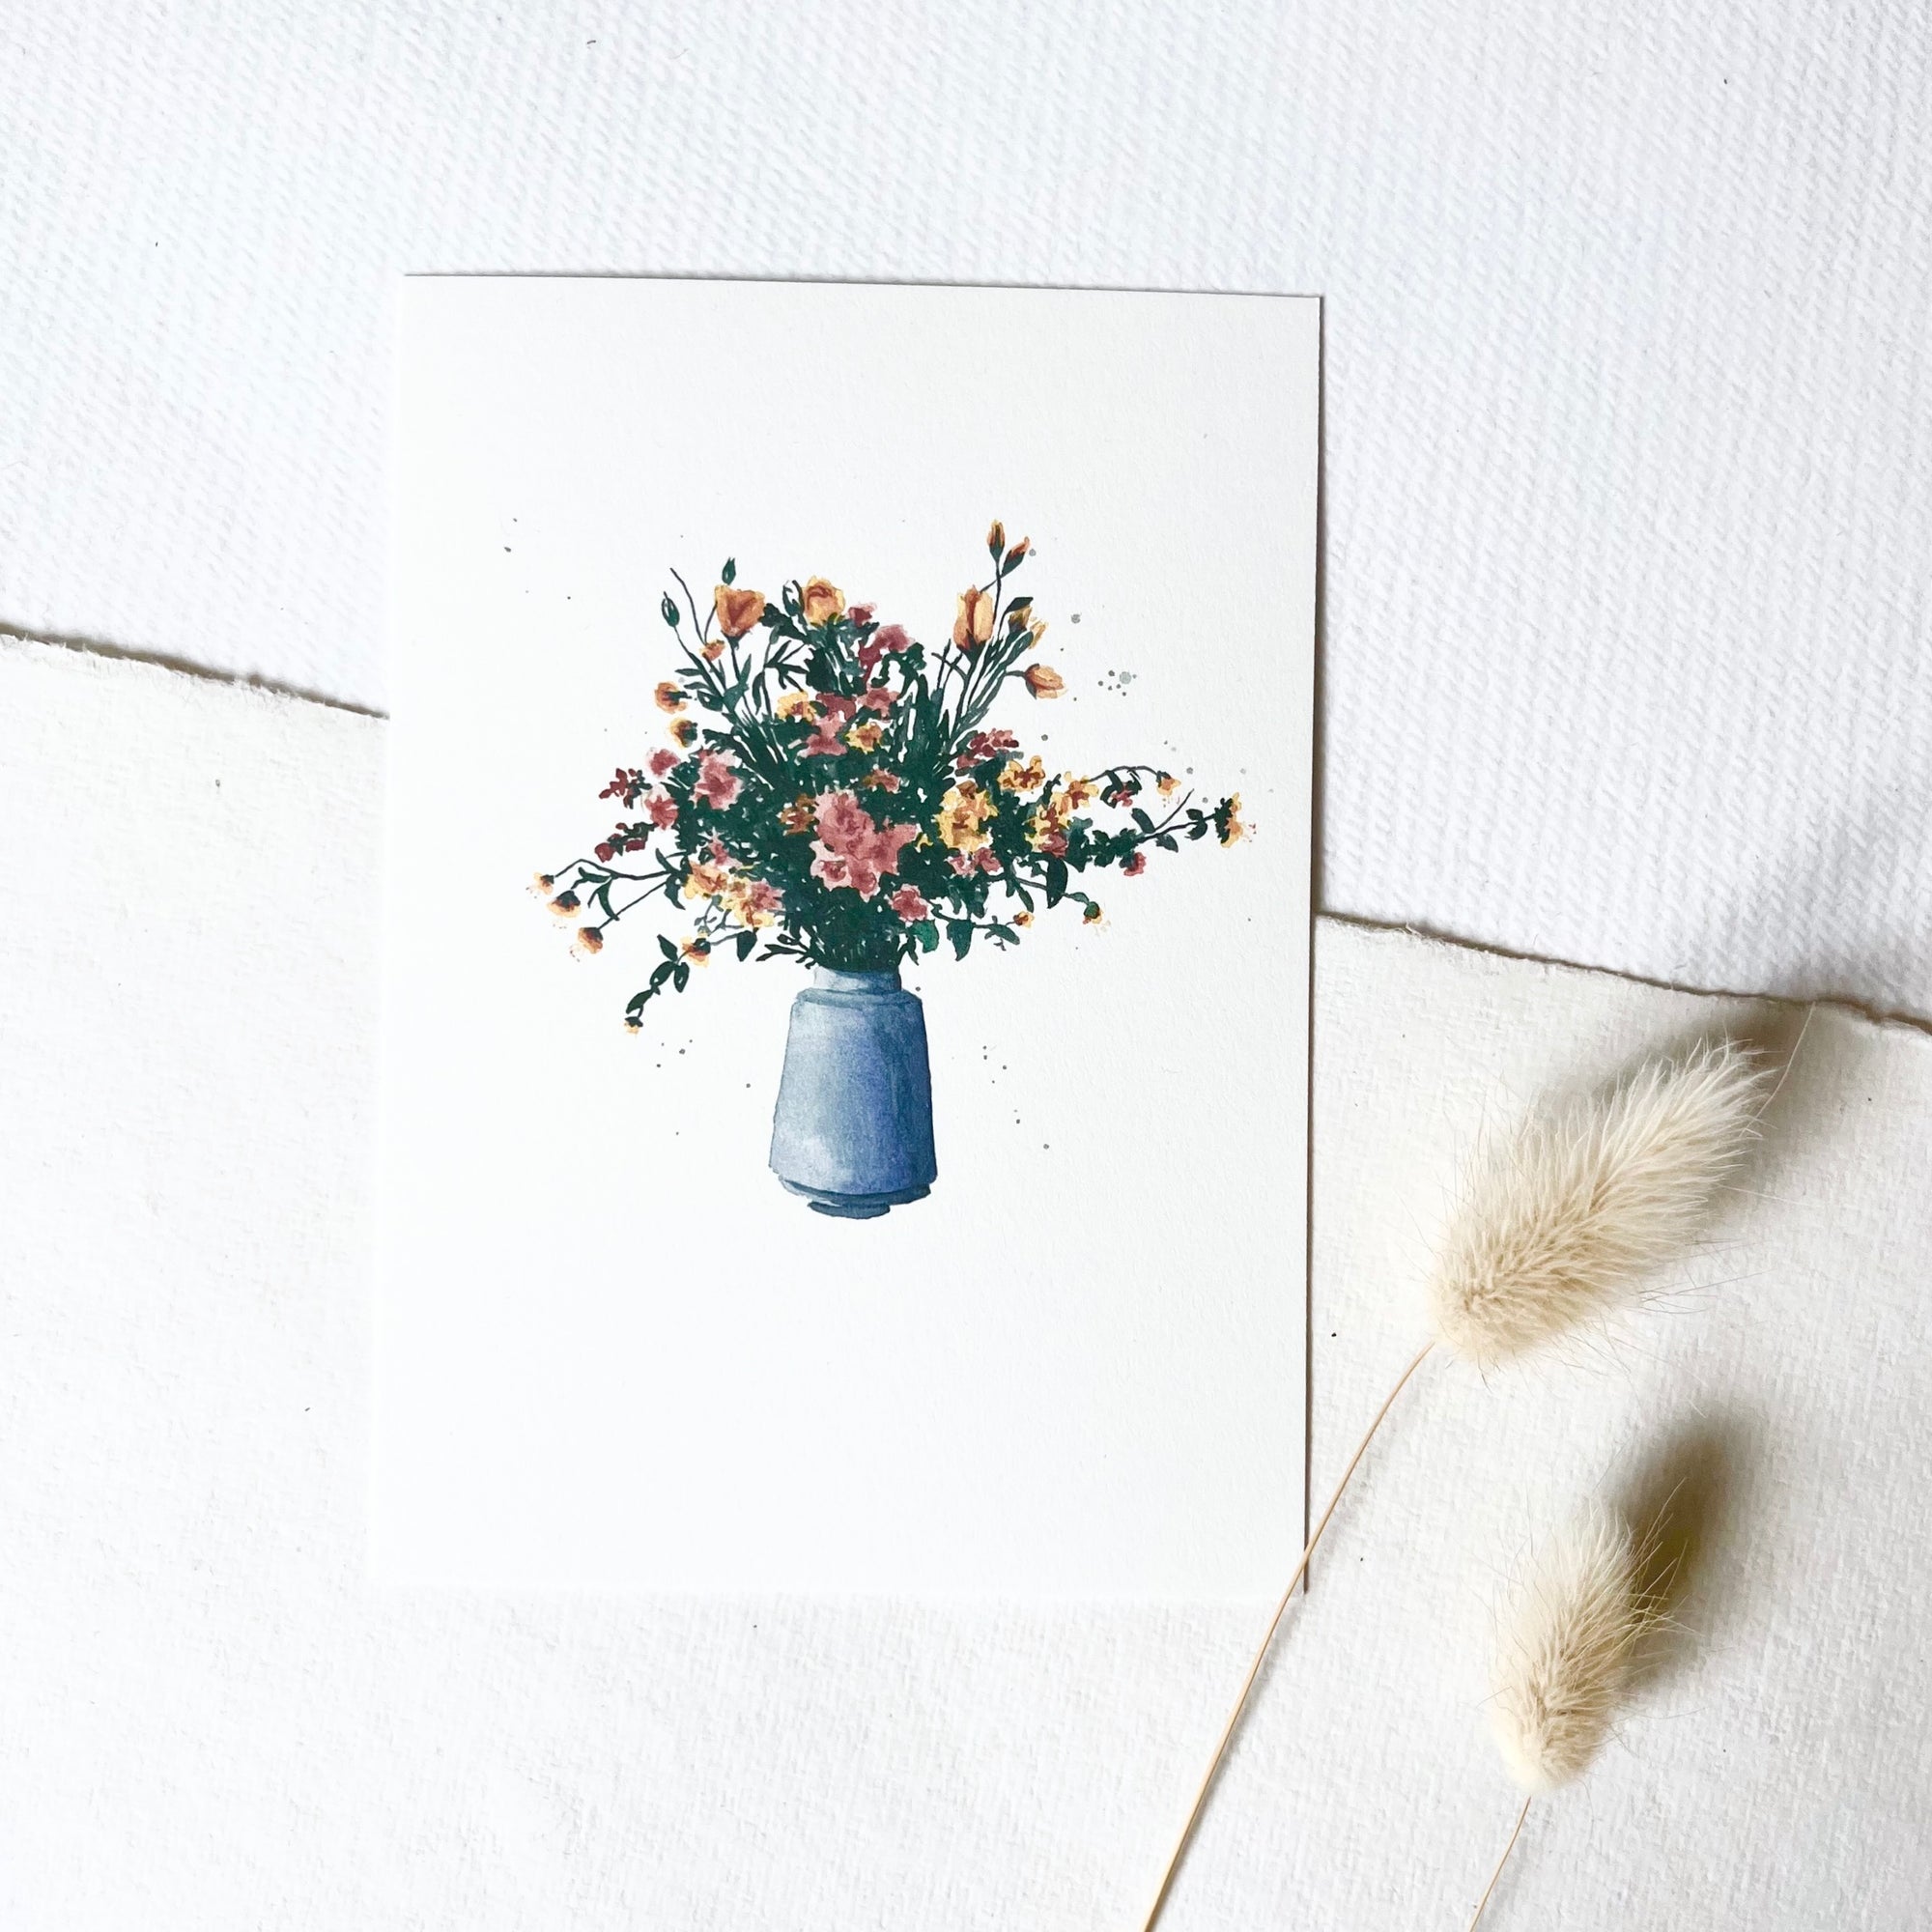 Postkarte · Blue Flower Vase Postkarte Leo la Douce 